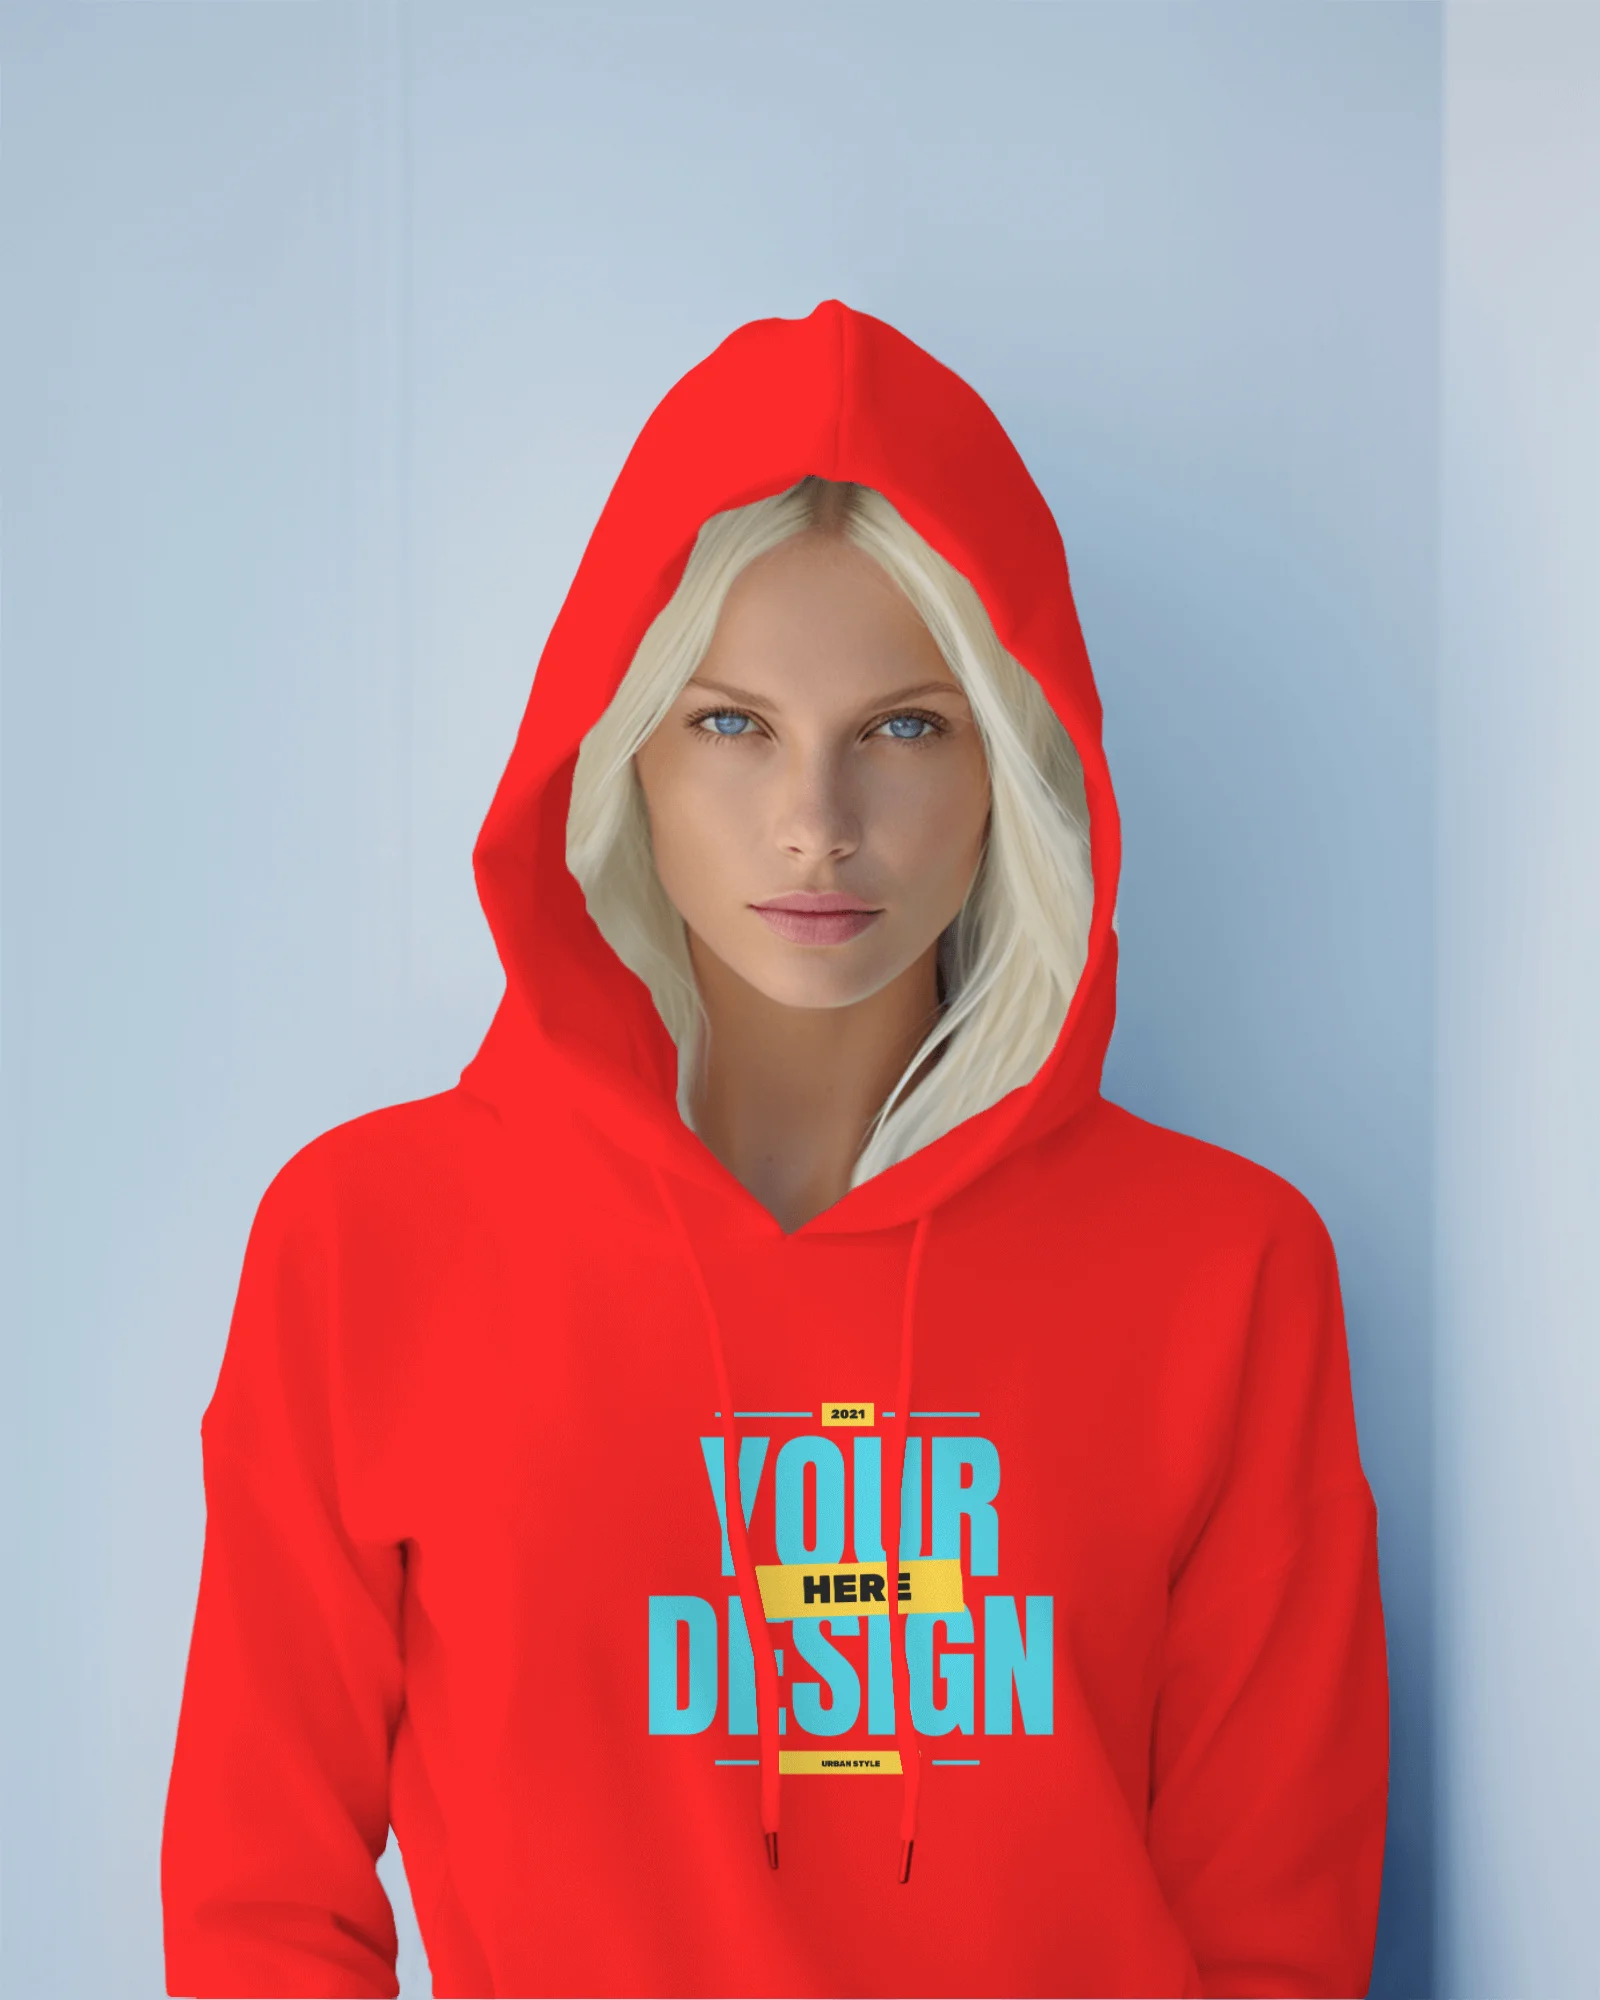 Premium AI Image  A custom sublimation hoodies mockup